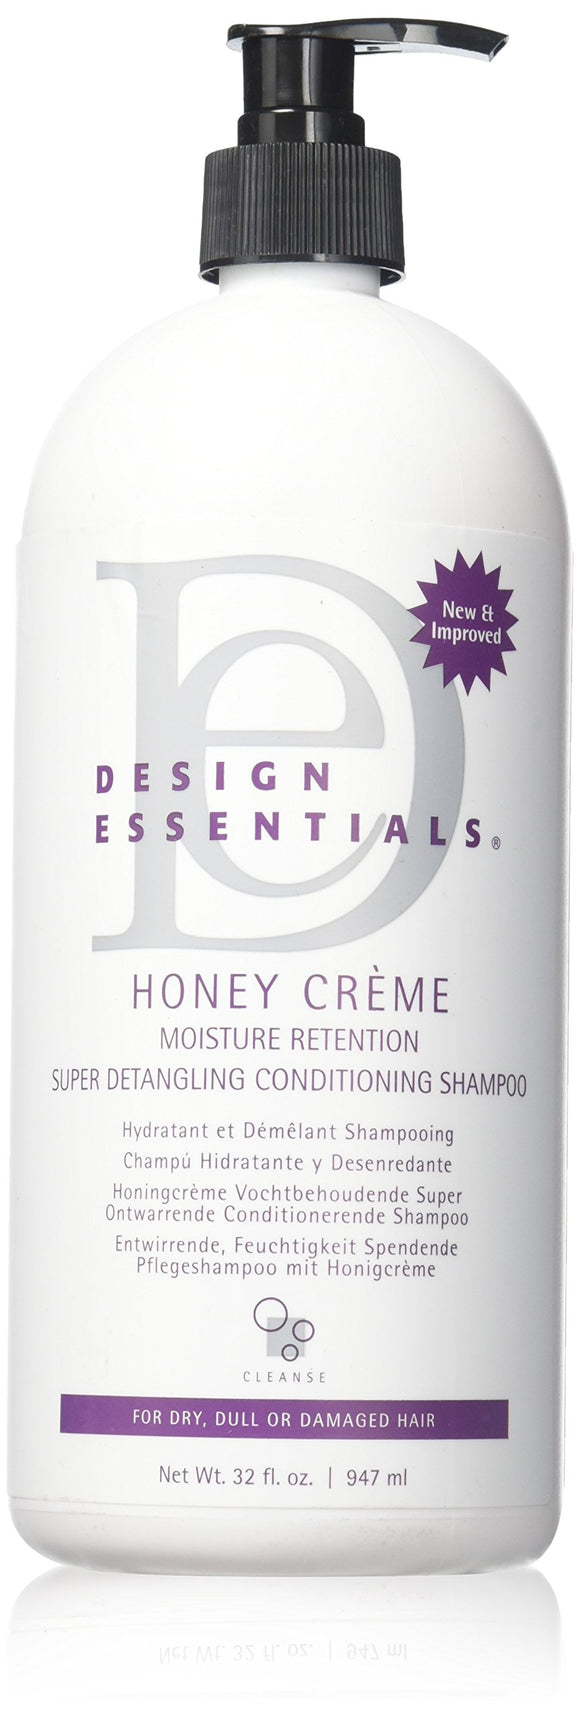 Design Essentials Honey Creme Moisture Retention Super Detangling Conditioning Shampoo, 32 Fl Oz - Beauty Fleet